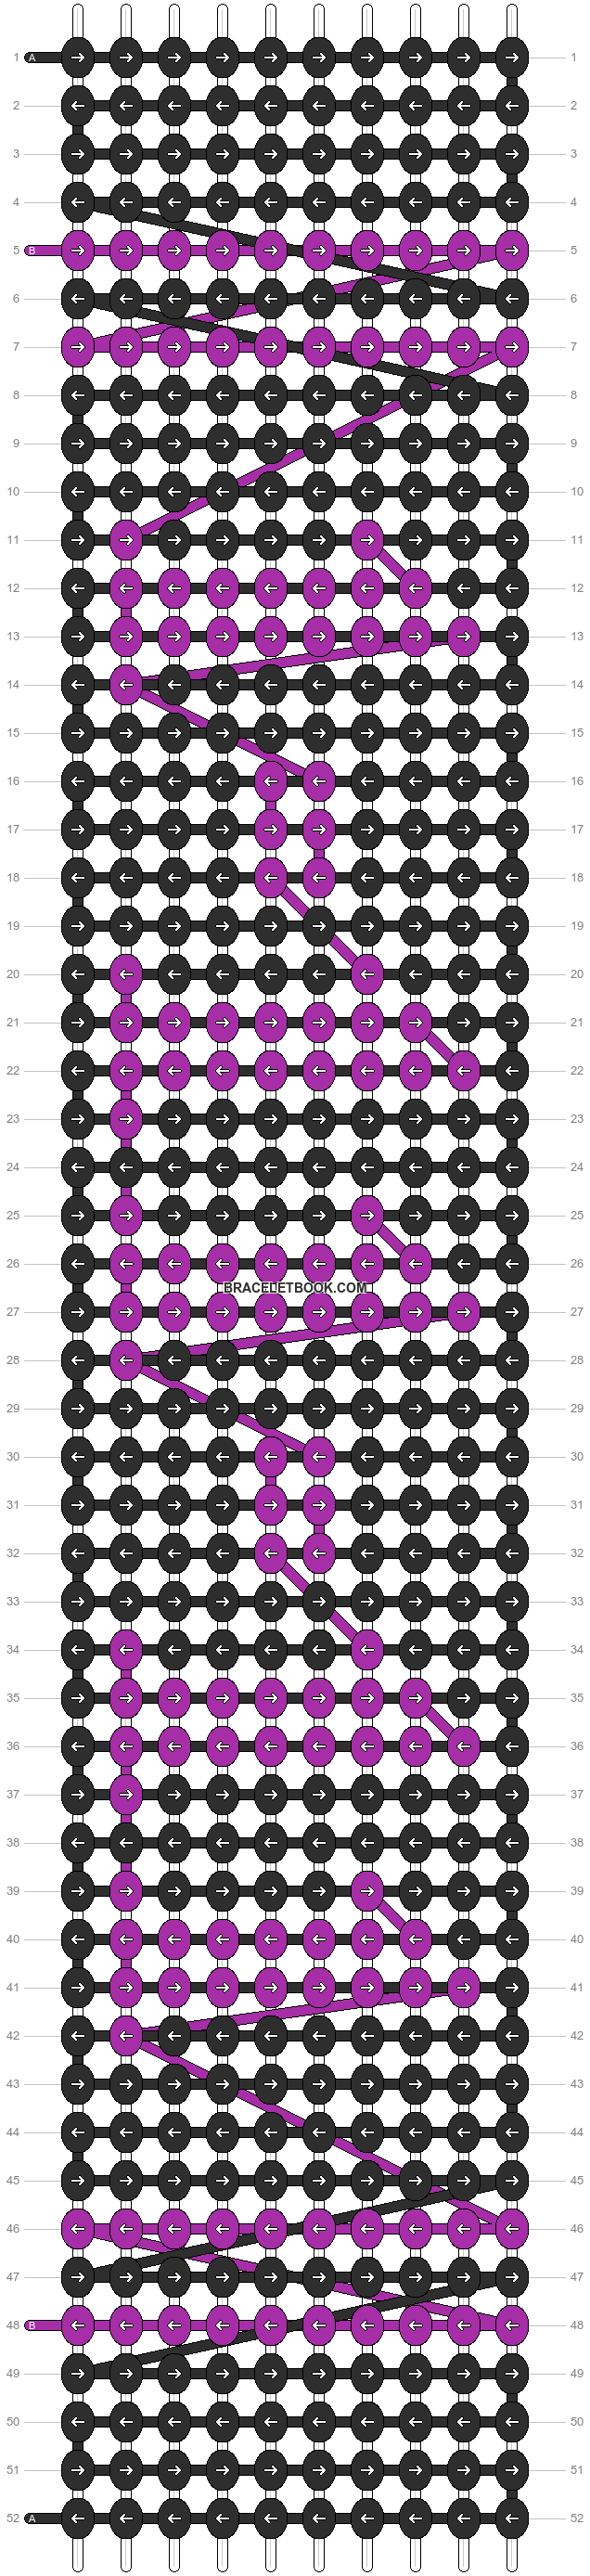 Alpha pattern #1885 pattern